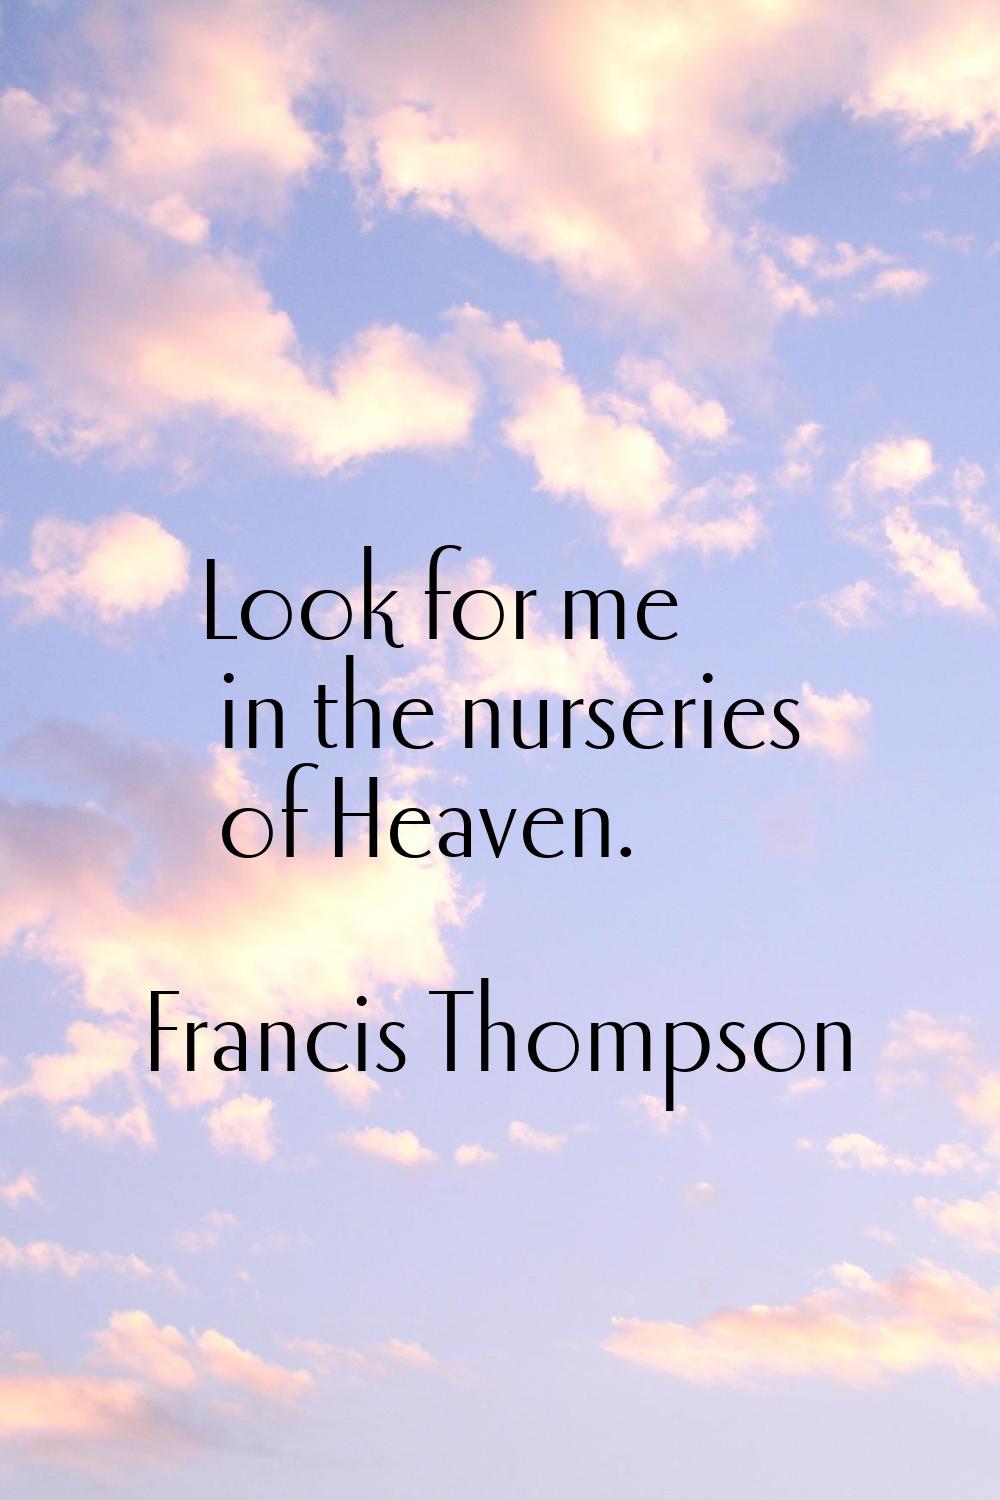 Look for me in the nurseries of Heaven.